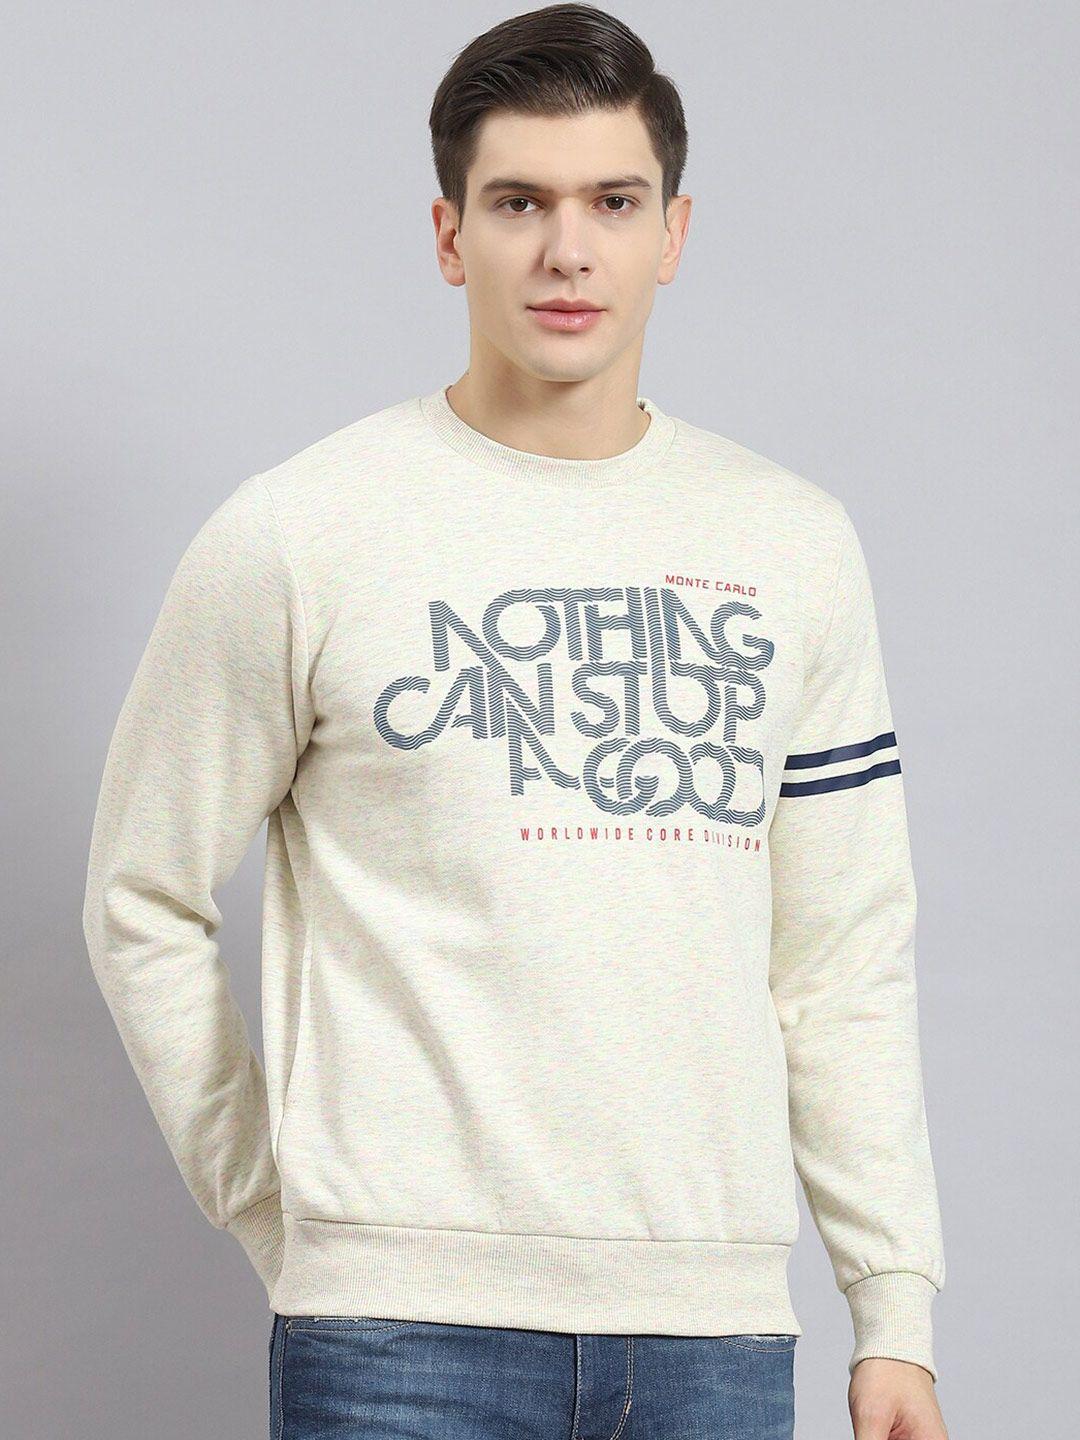 monte carlo typography printed pullover sweatshirt